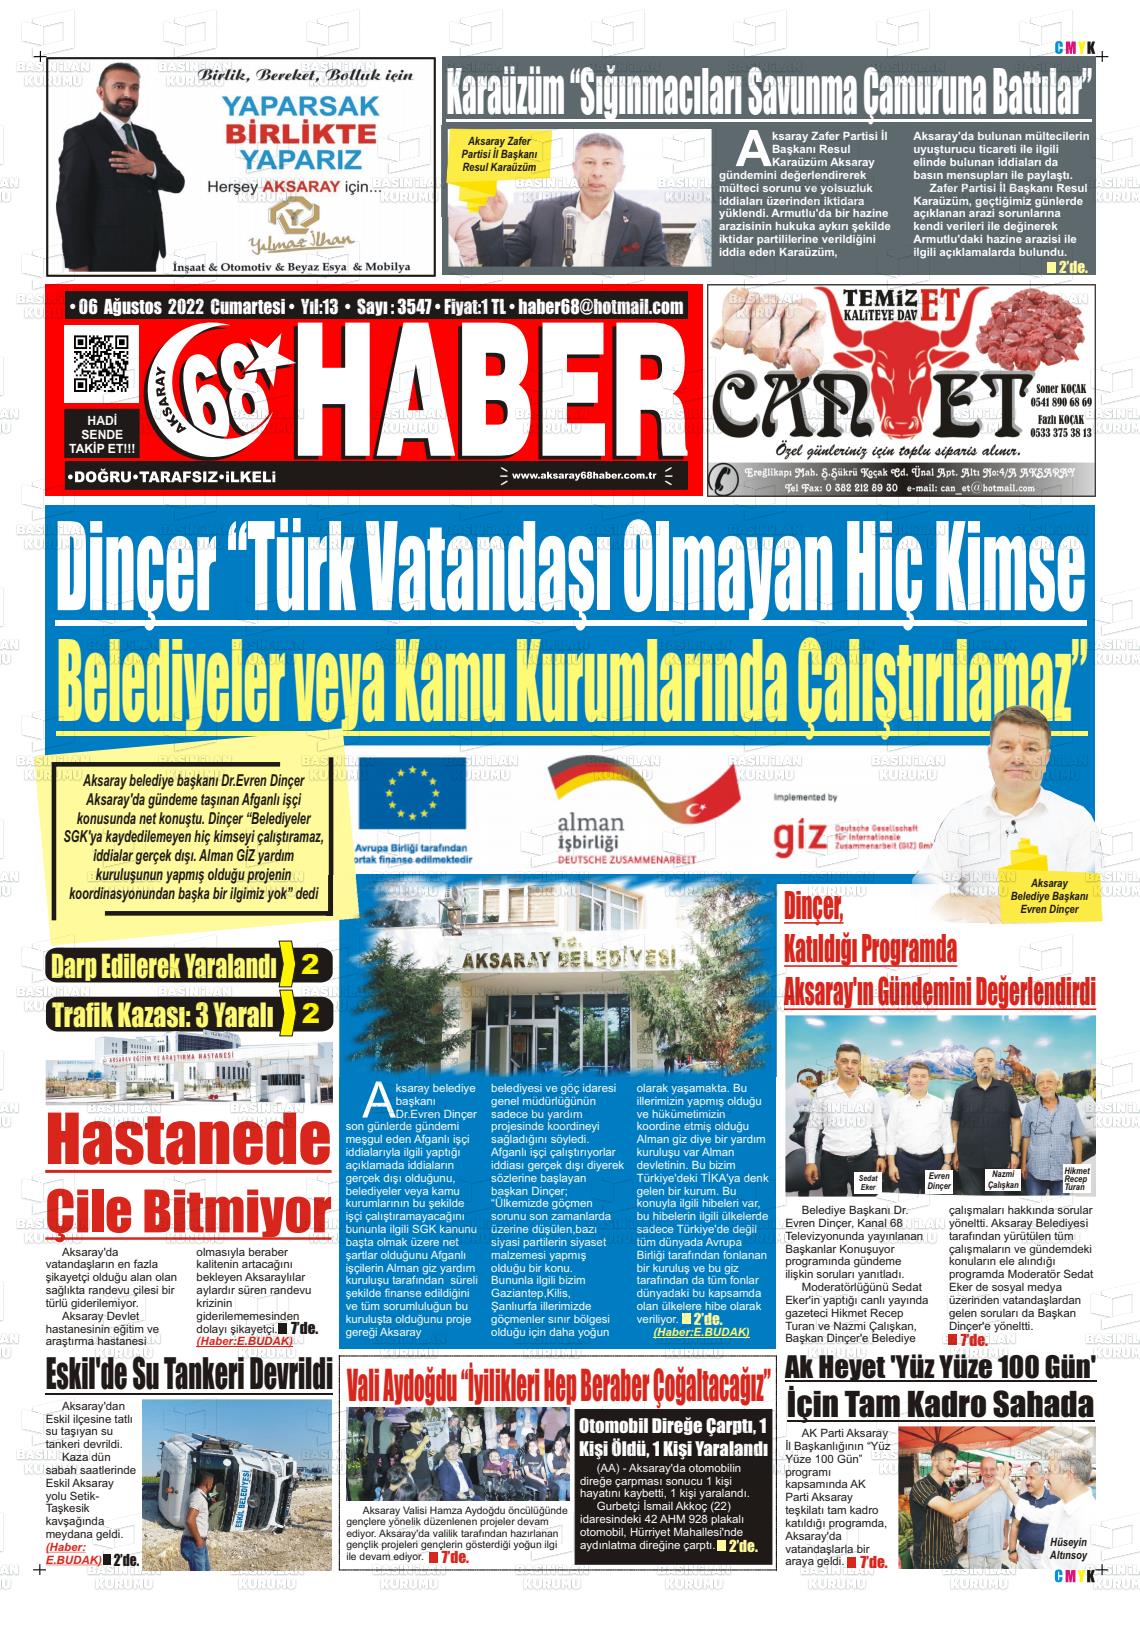 06 Ağustos 2022 Aksaray 68 Haber Gazete Manşeti